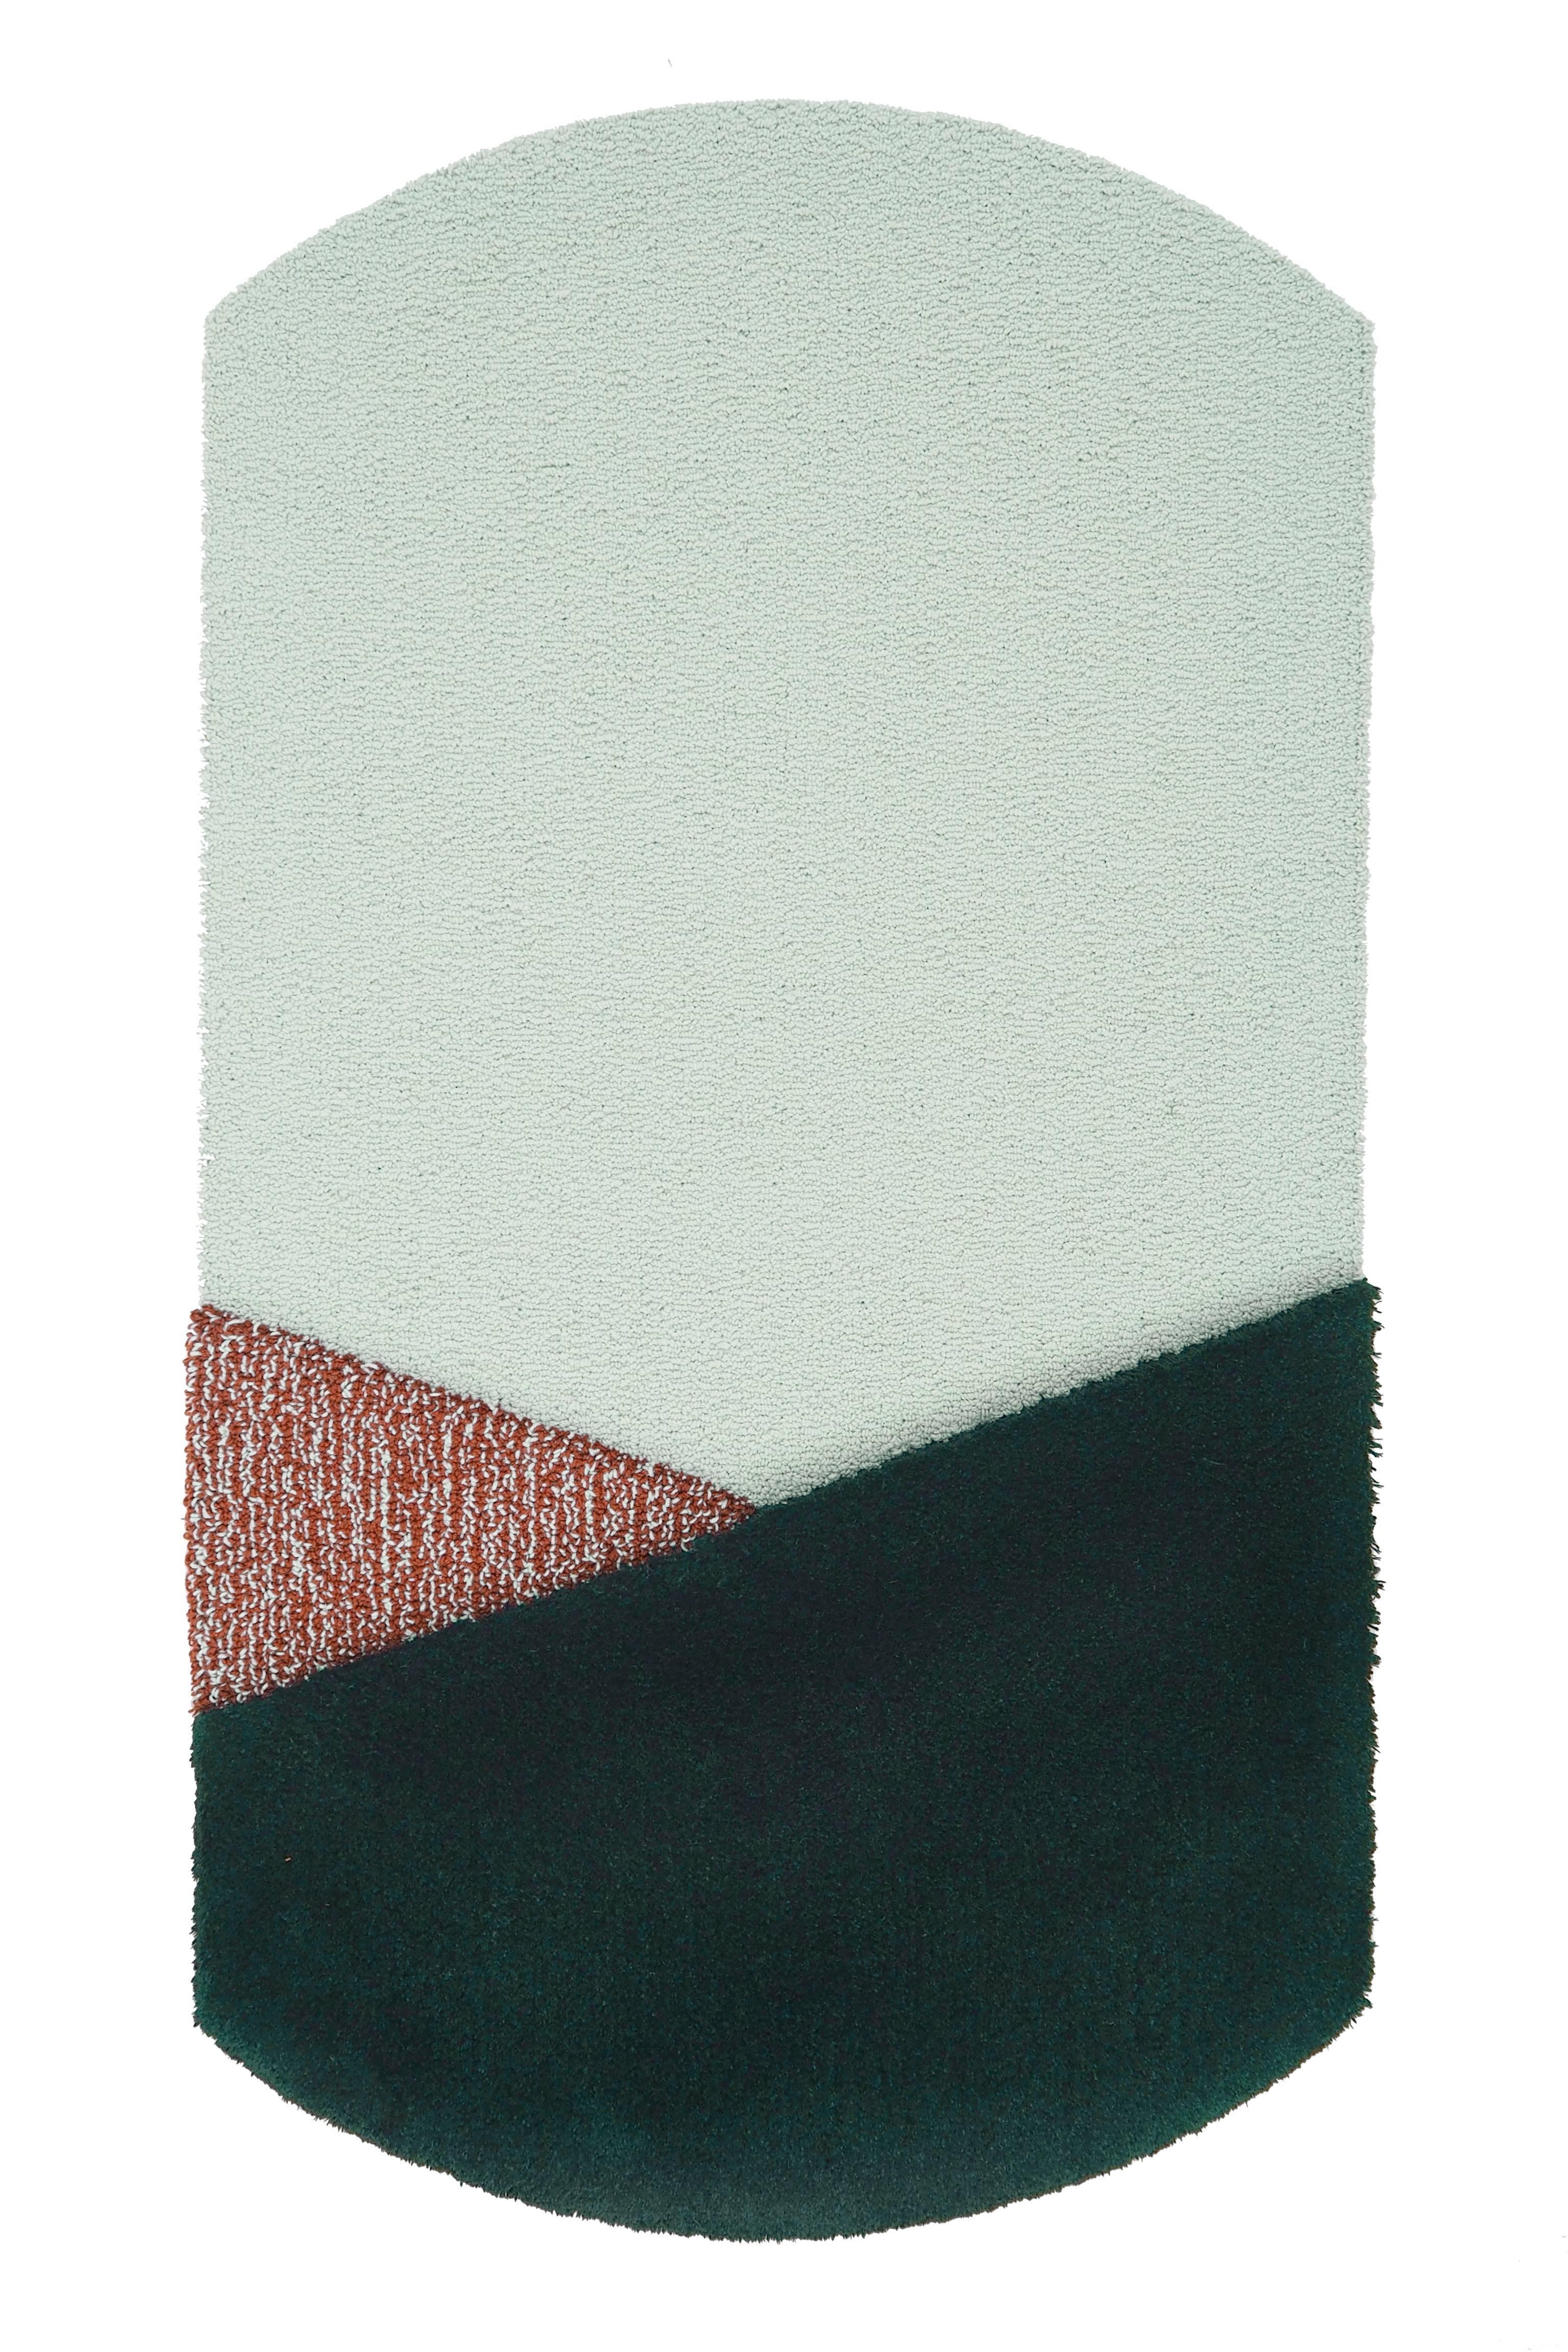 Medium Green Oci Rug Triptych by Seraina Lareida In New Condition For Sale In Geneve, CH